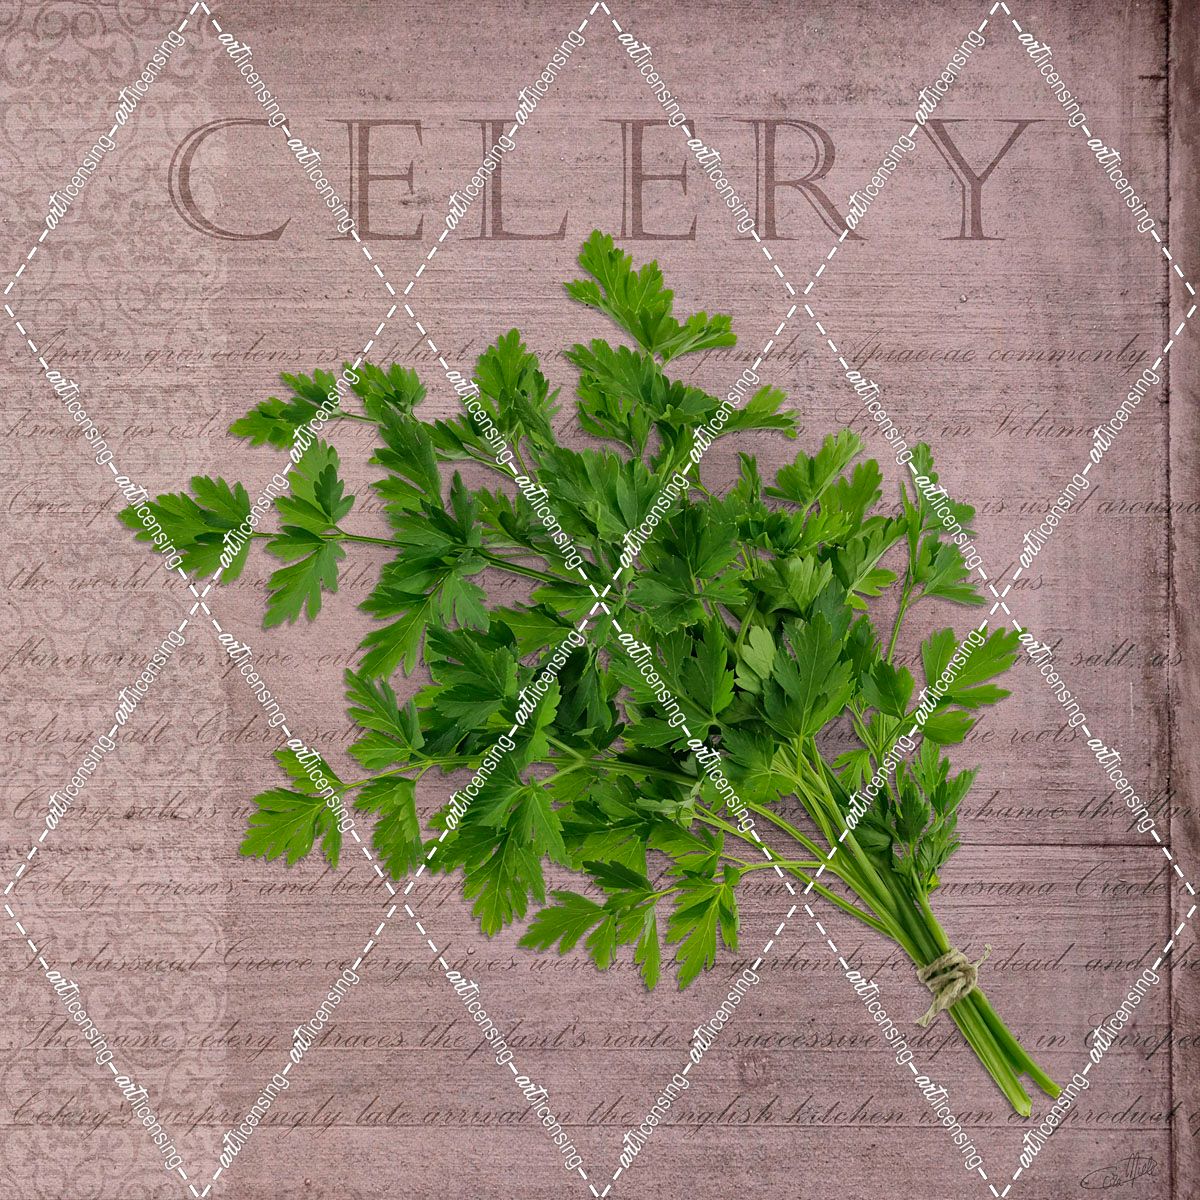 Classic Herbs Celery